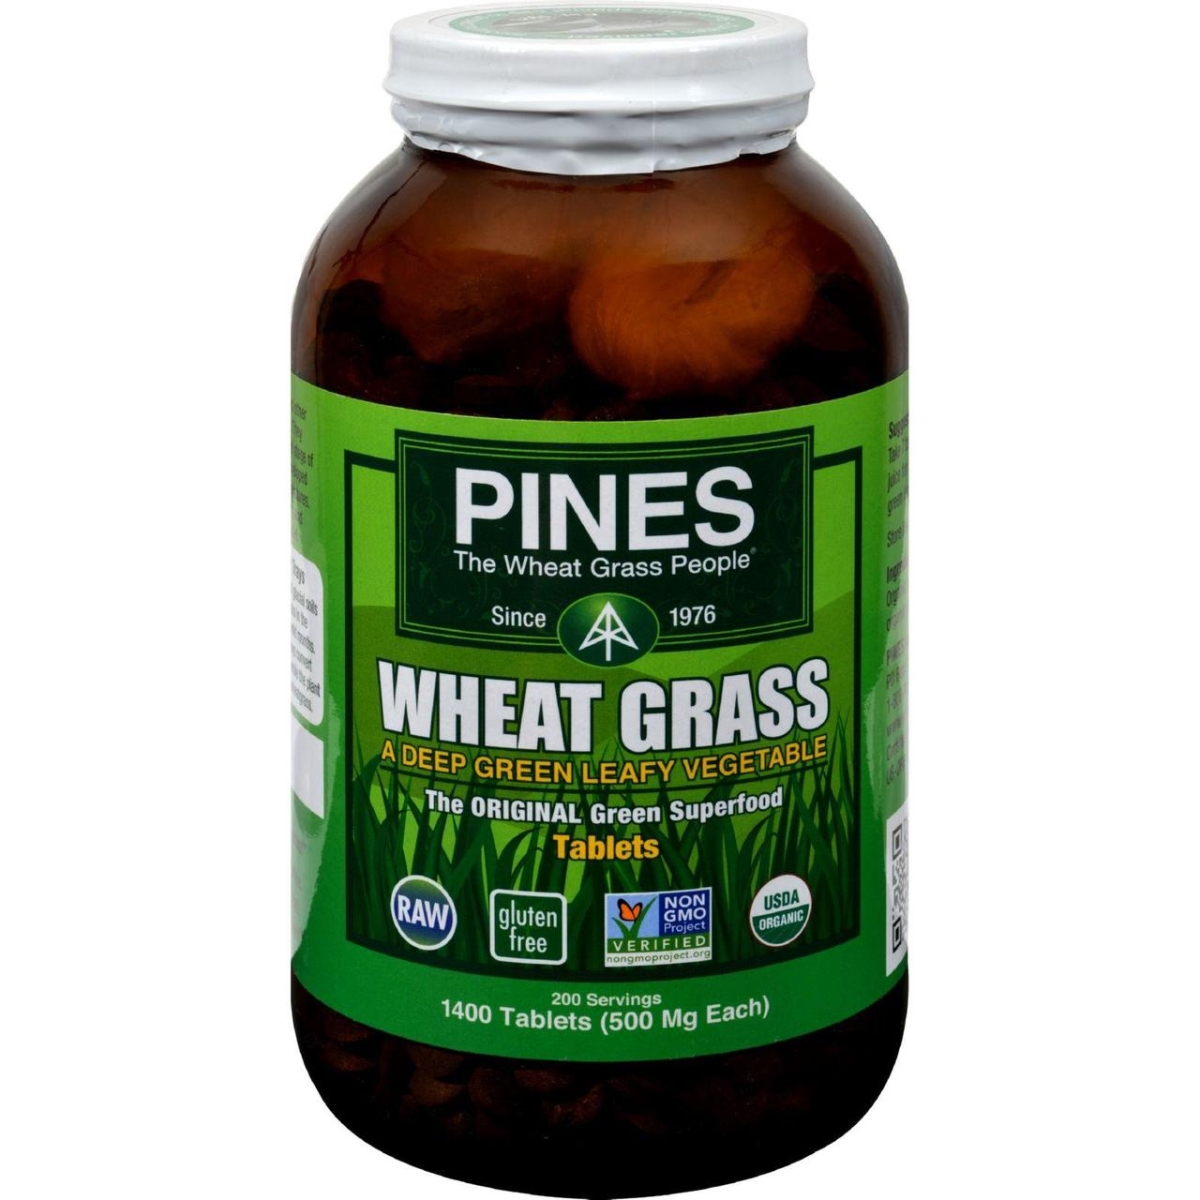 Hg0652115 500 Mg Wheat Grass - 1400 Tablets